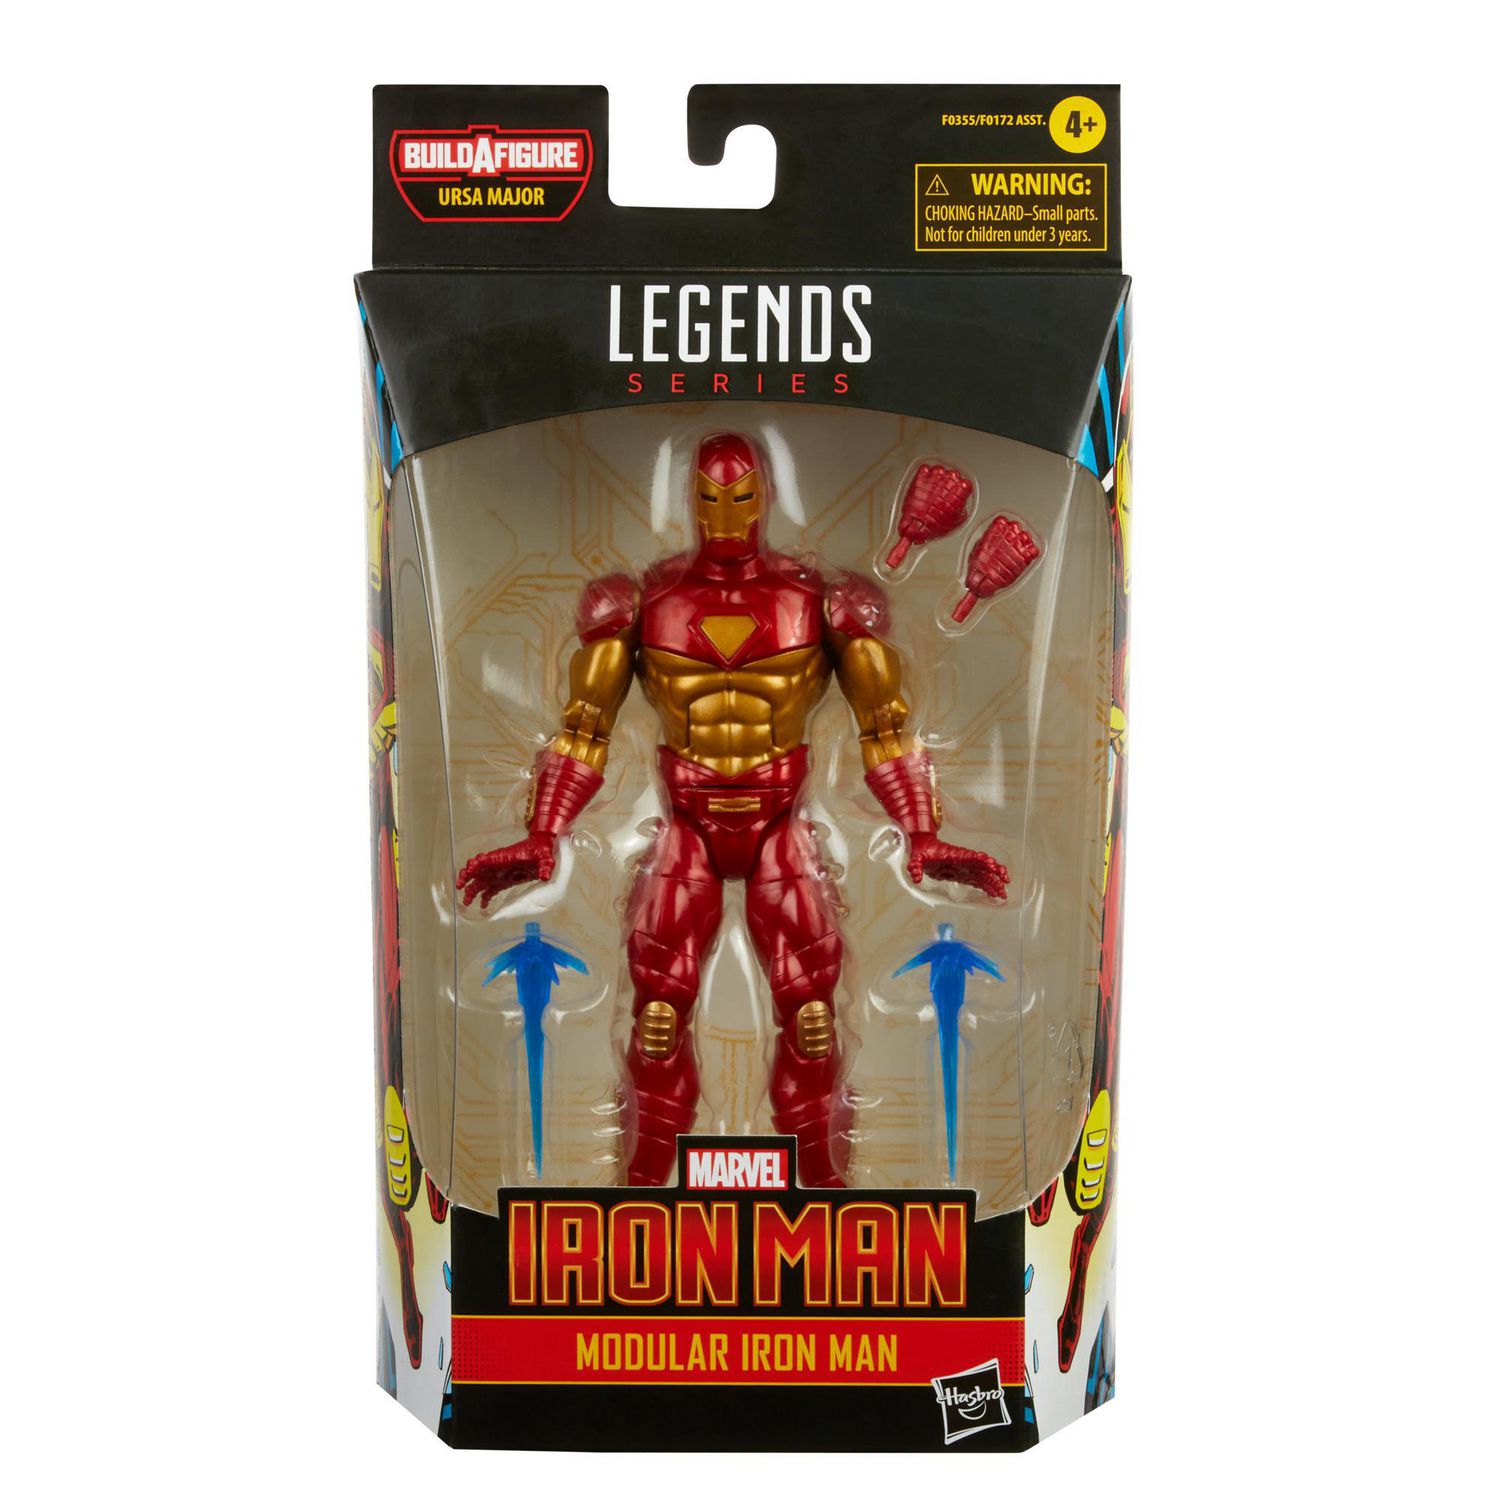 Hasbro Marvel Legends Series 6-inch Modular Iron Man Action Figure